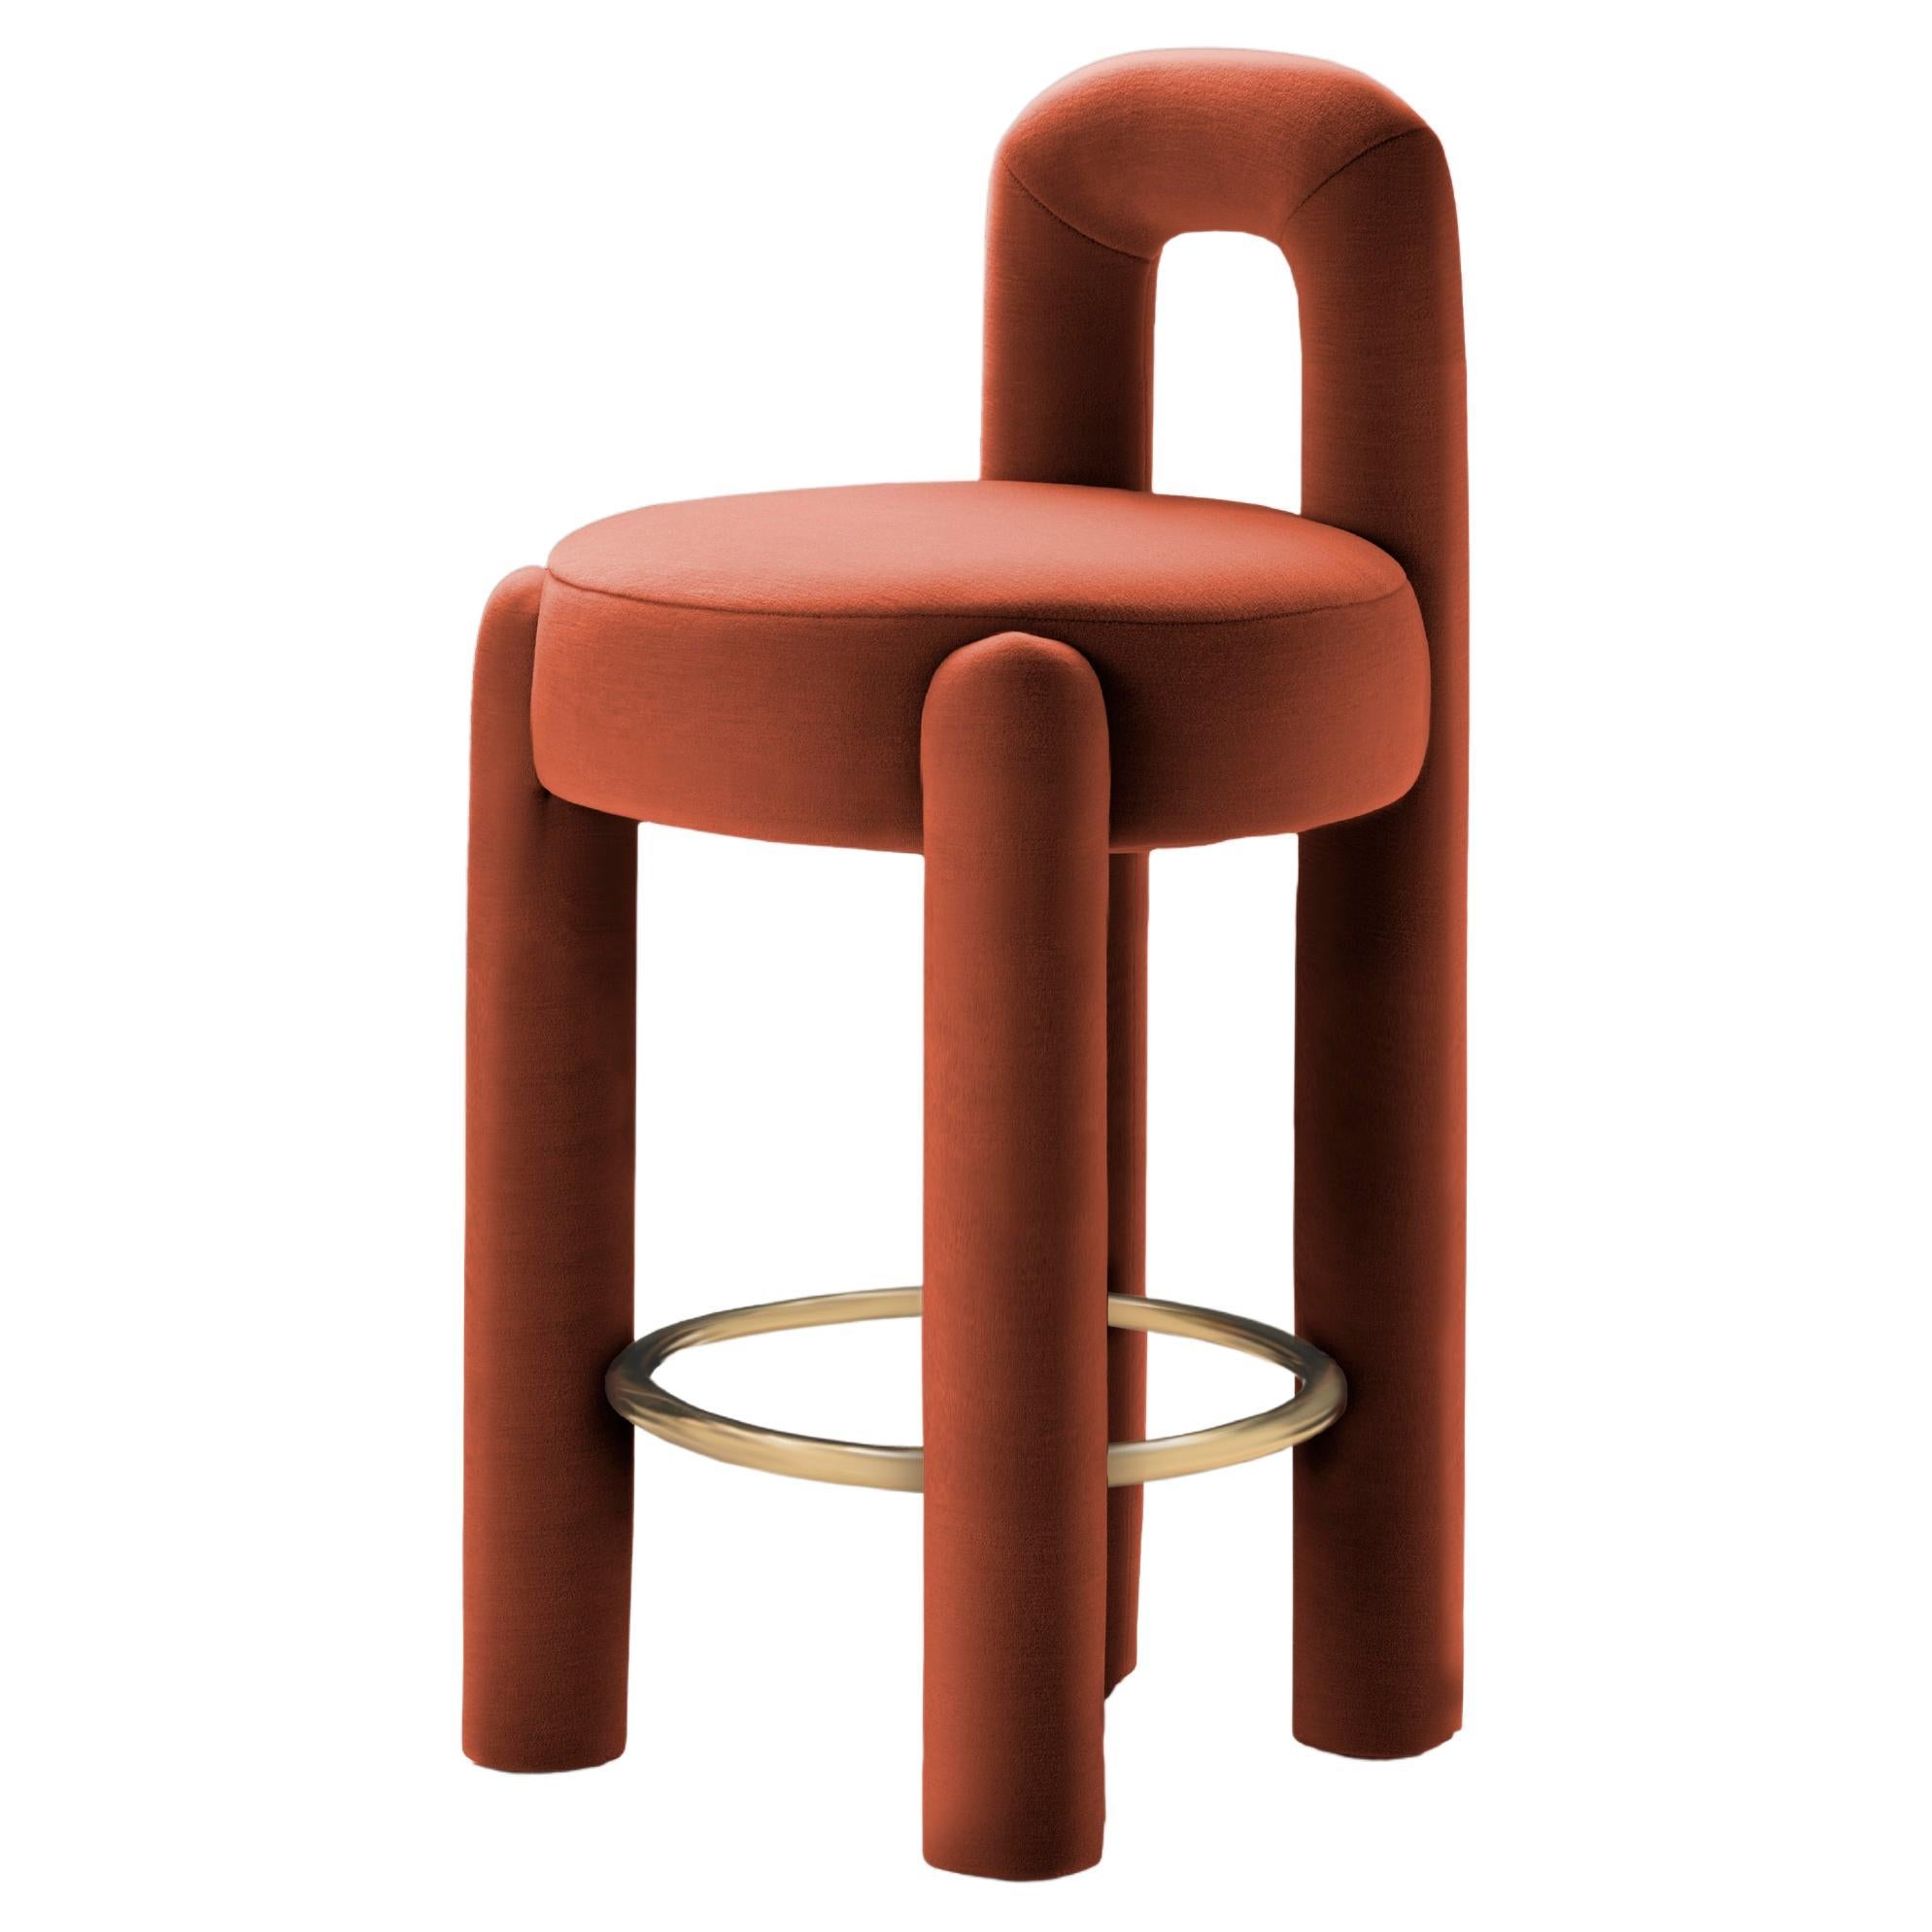 DOOQ! Organic Modern Marlon Bar Chair in Brown Kvadrat by P. Franceschini